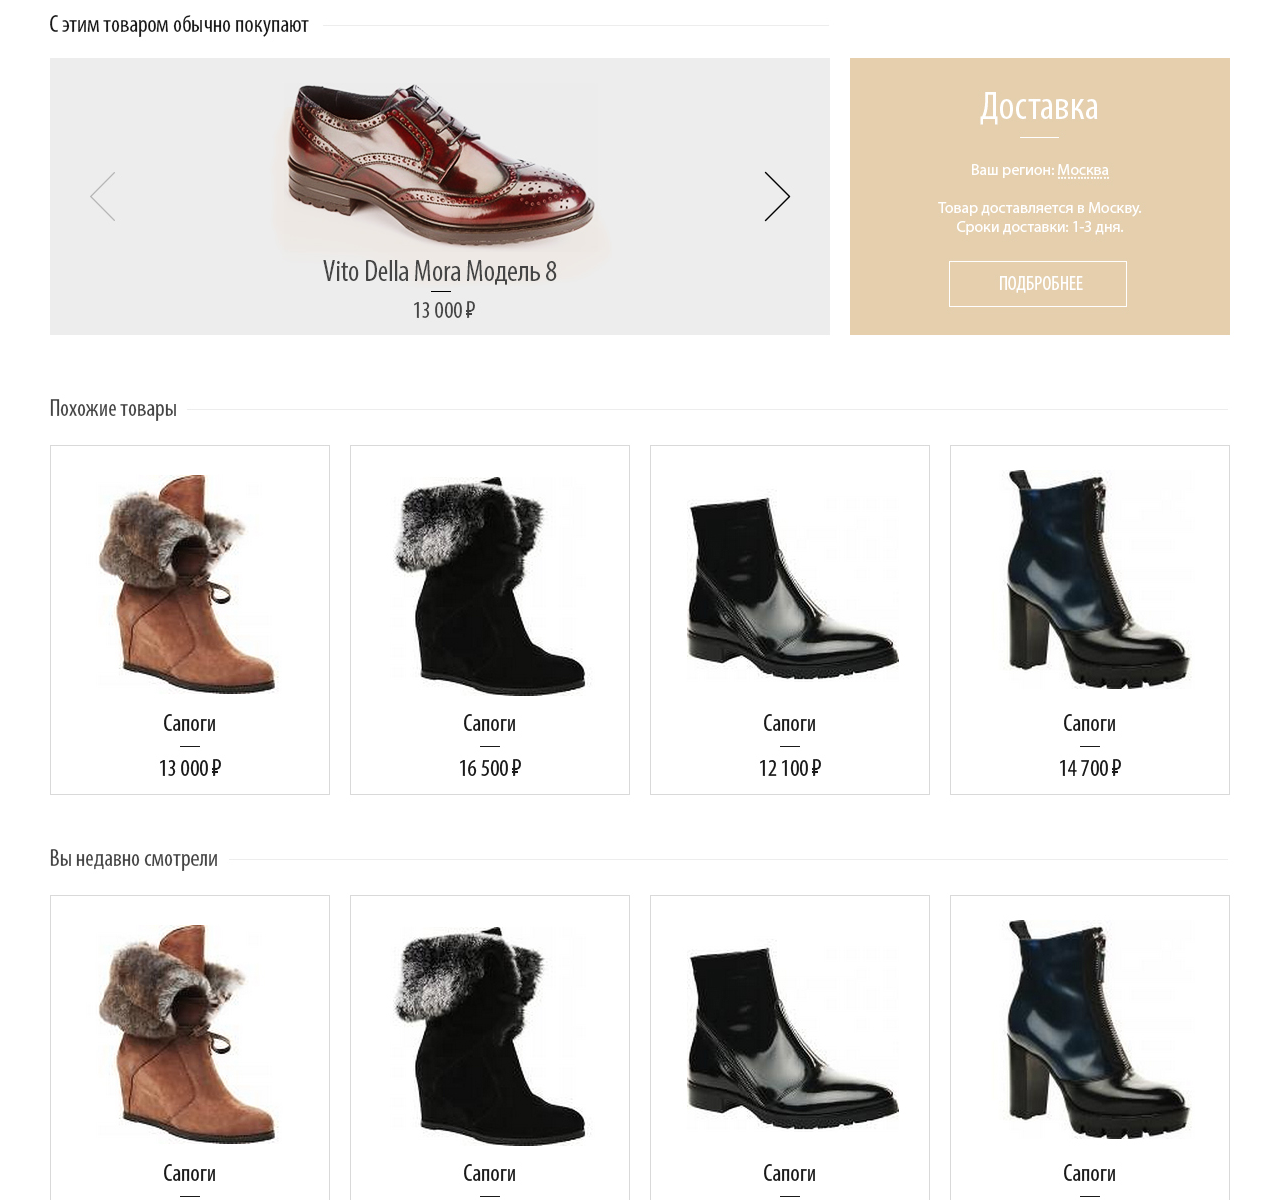 интернет-магазин салонов обуви и аксессуаров  «мода и комфорт»